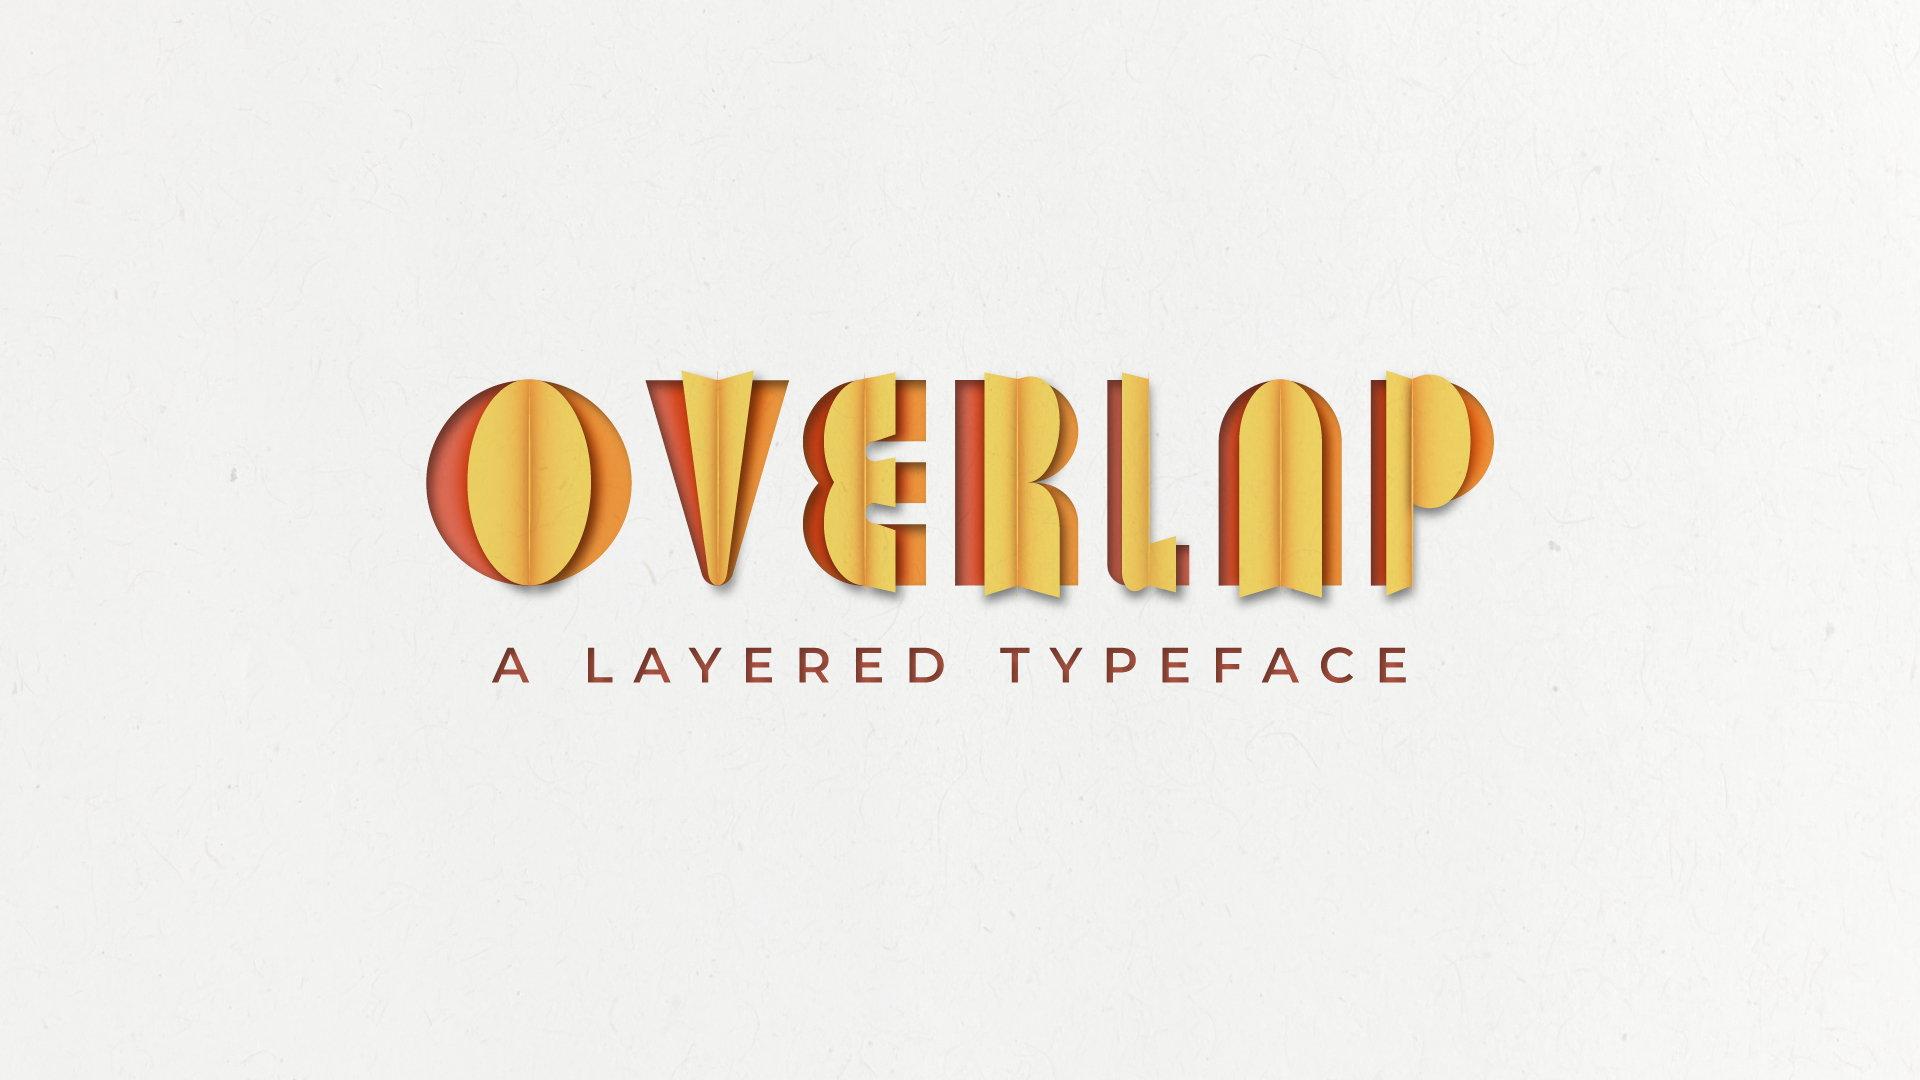 Type specimen: Overlap, a layered typeface